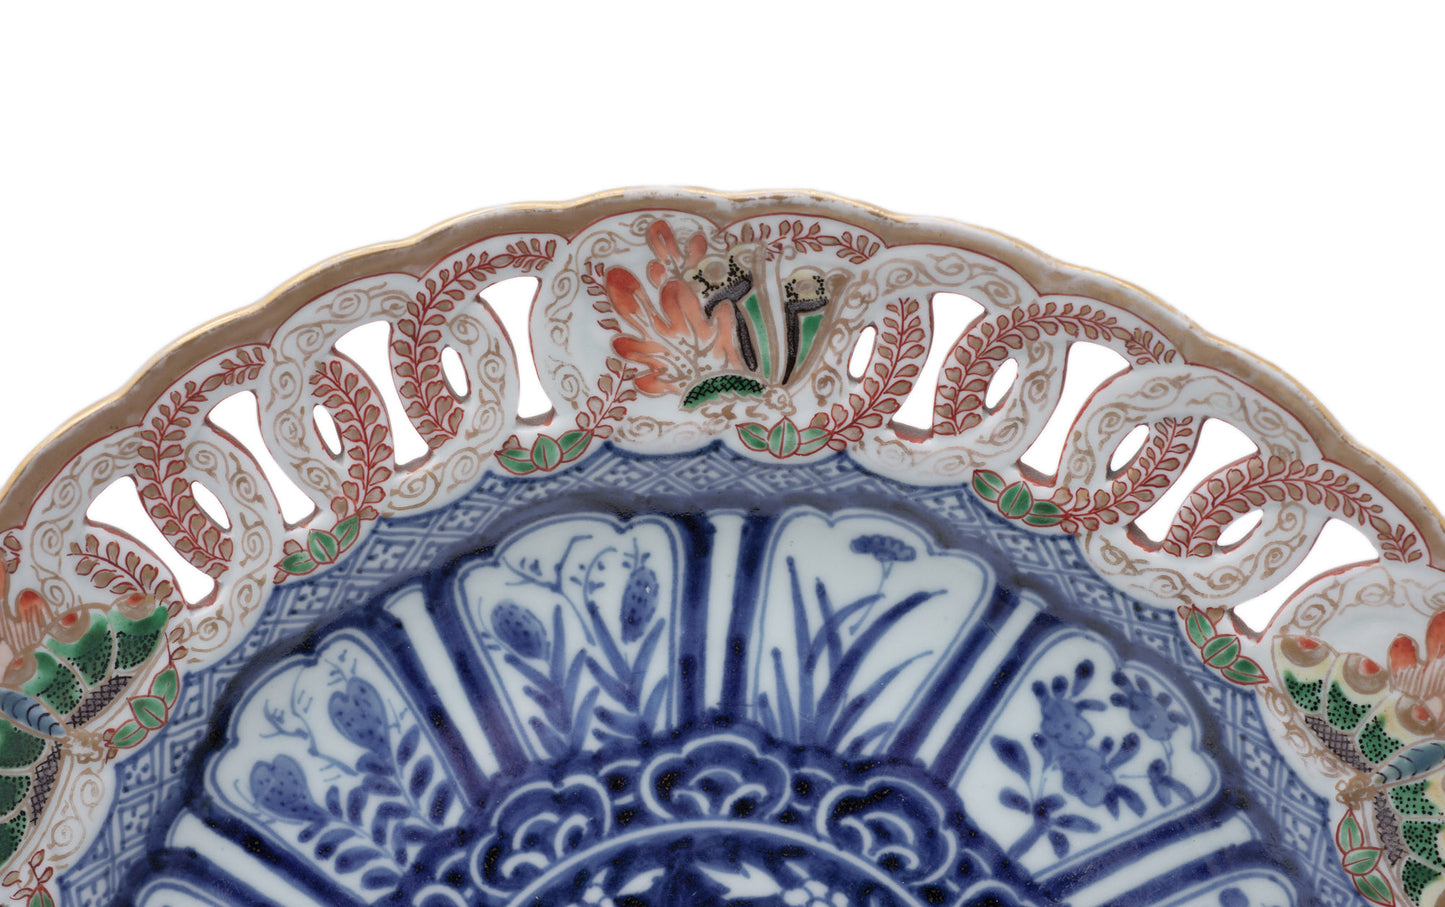 Antique Japanese Arita Imari & Blue & White Kraak Reticulated Porcelain Charger (Code 2509 A)